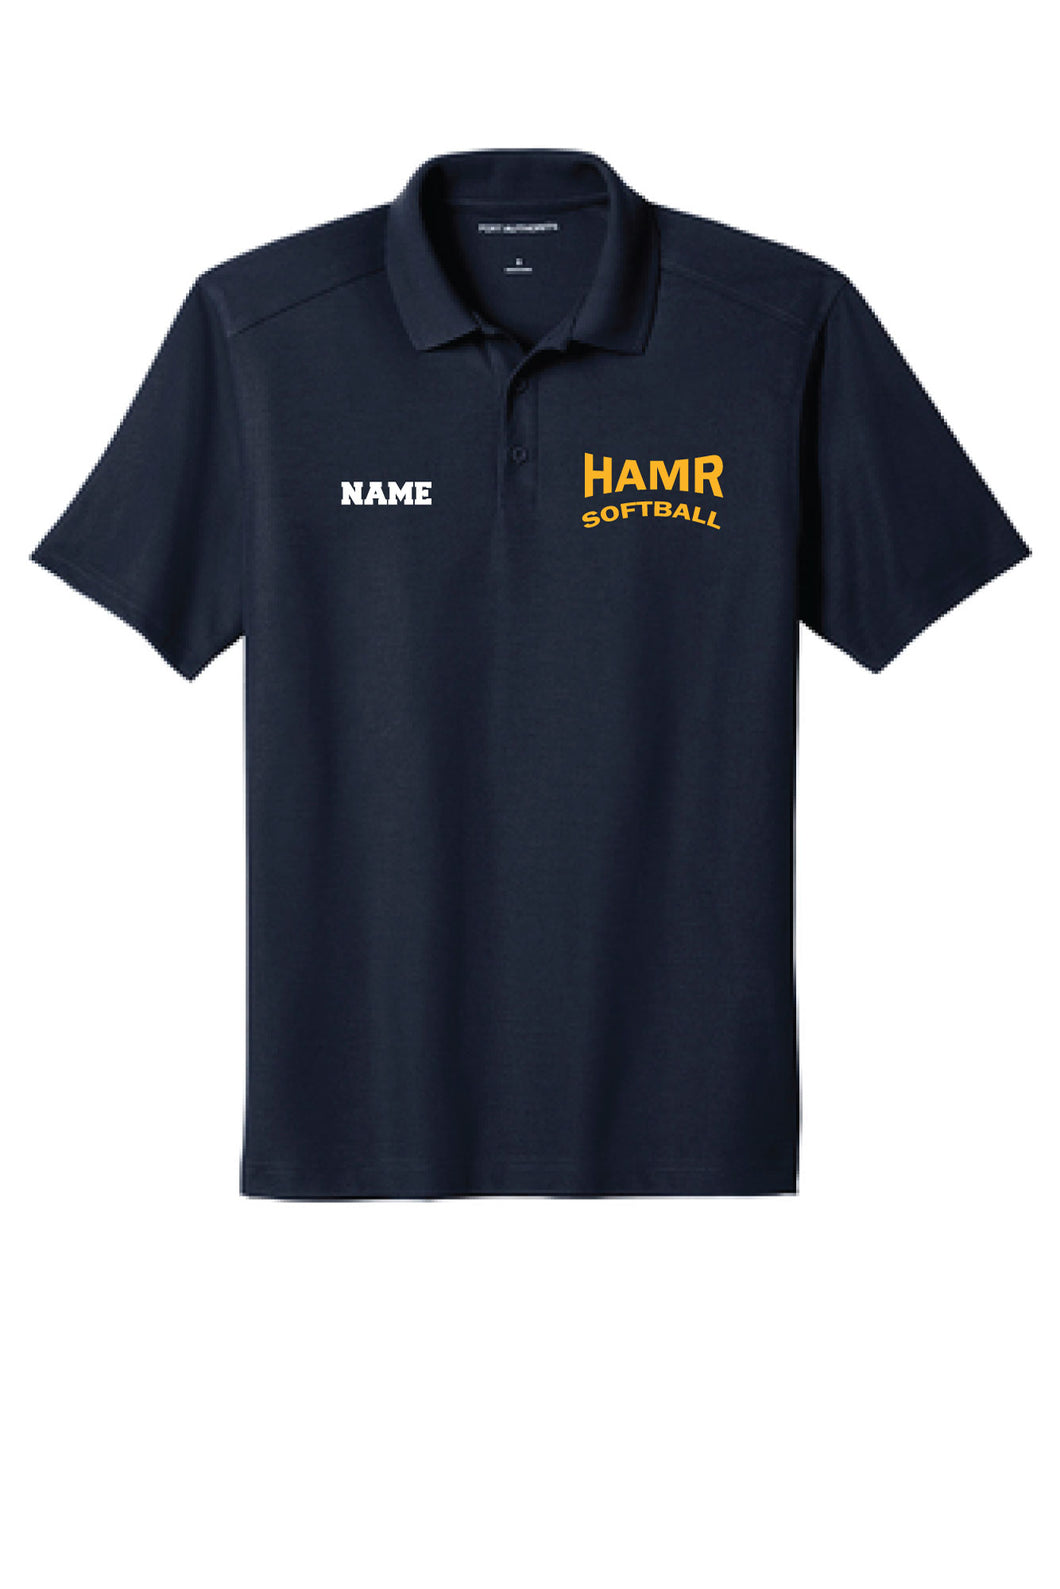 HAMR Softball Polo Shirt - Navy - 5KounT2018